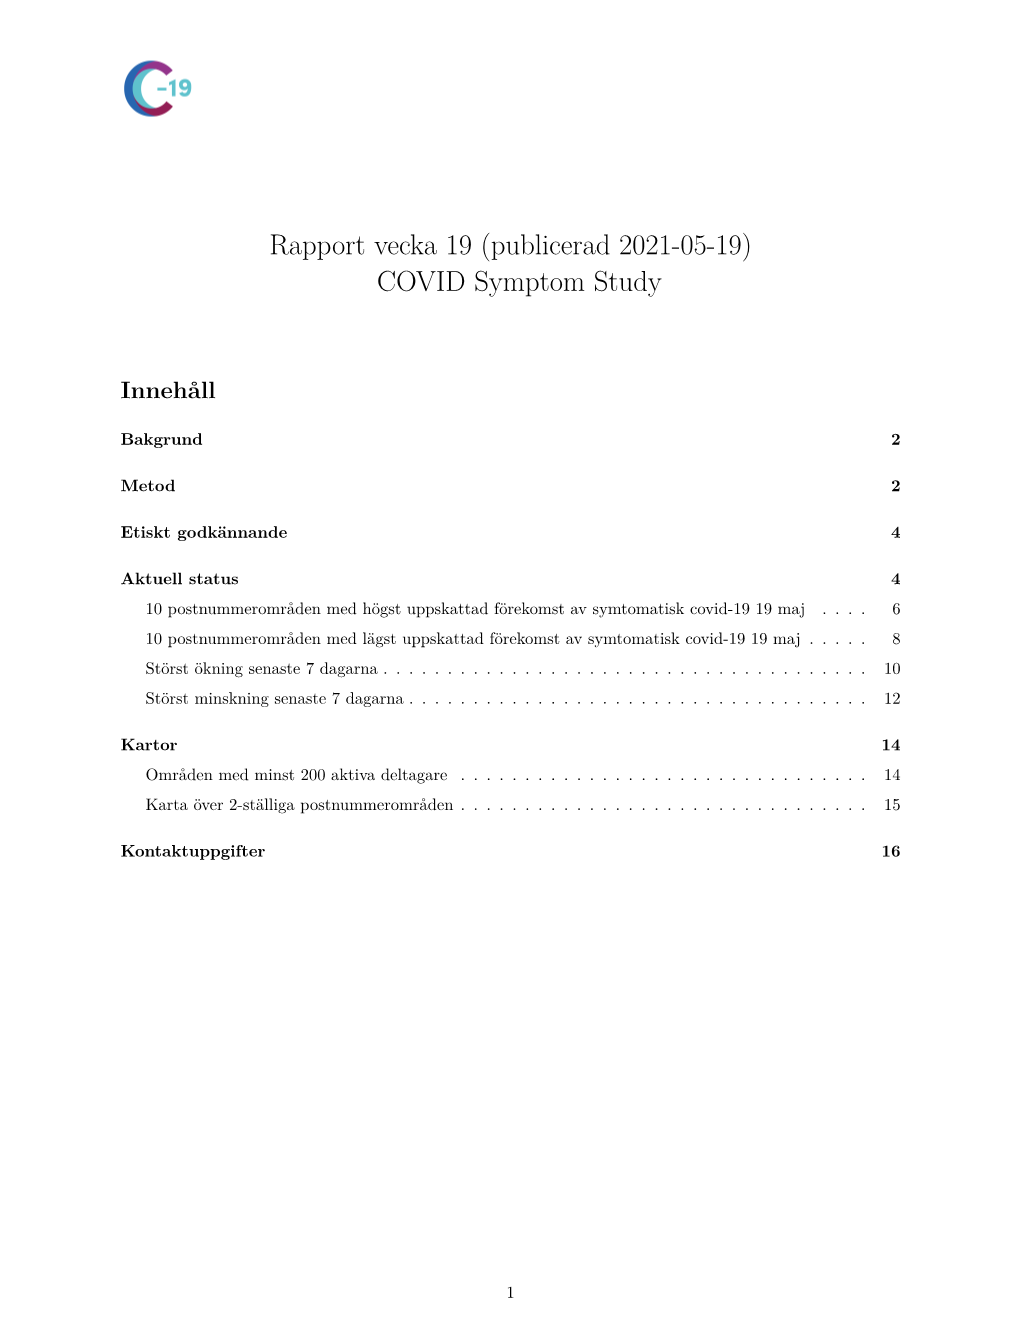 Rapport Vecka 19 (Publicerad 2021-05-19) COVID Symptom Study